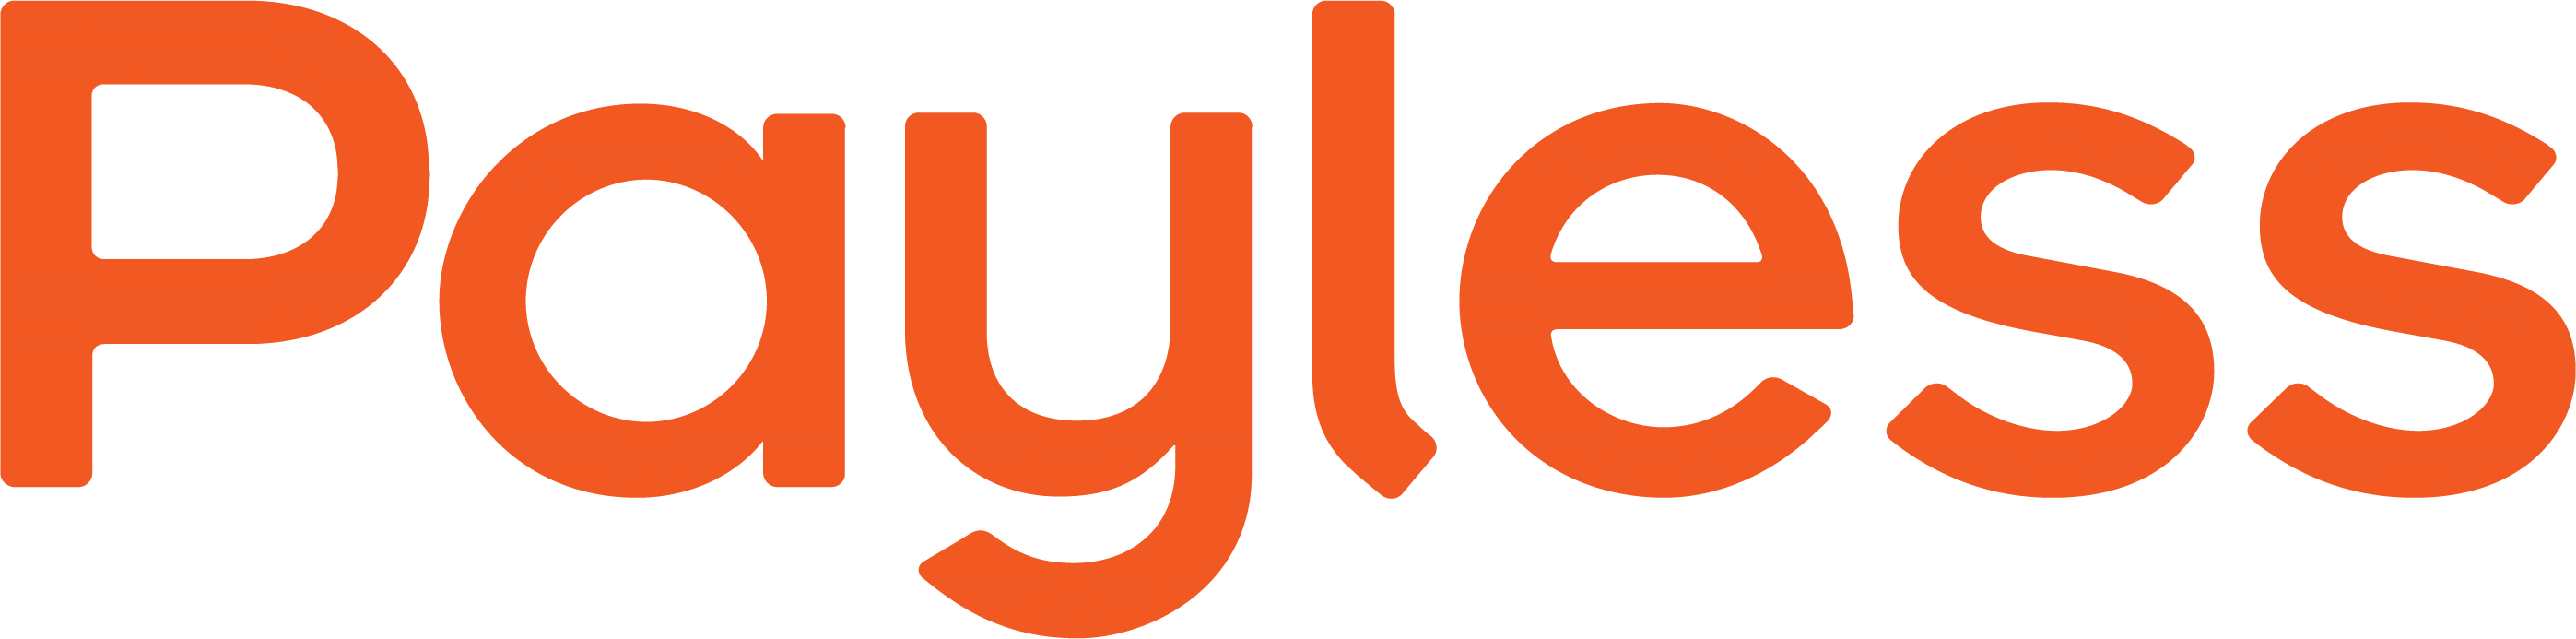 Payless Logo png